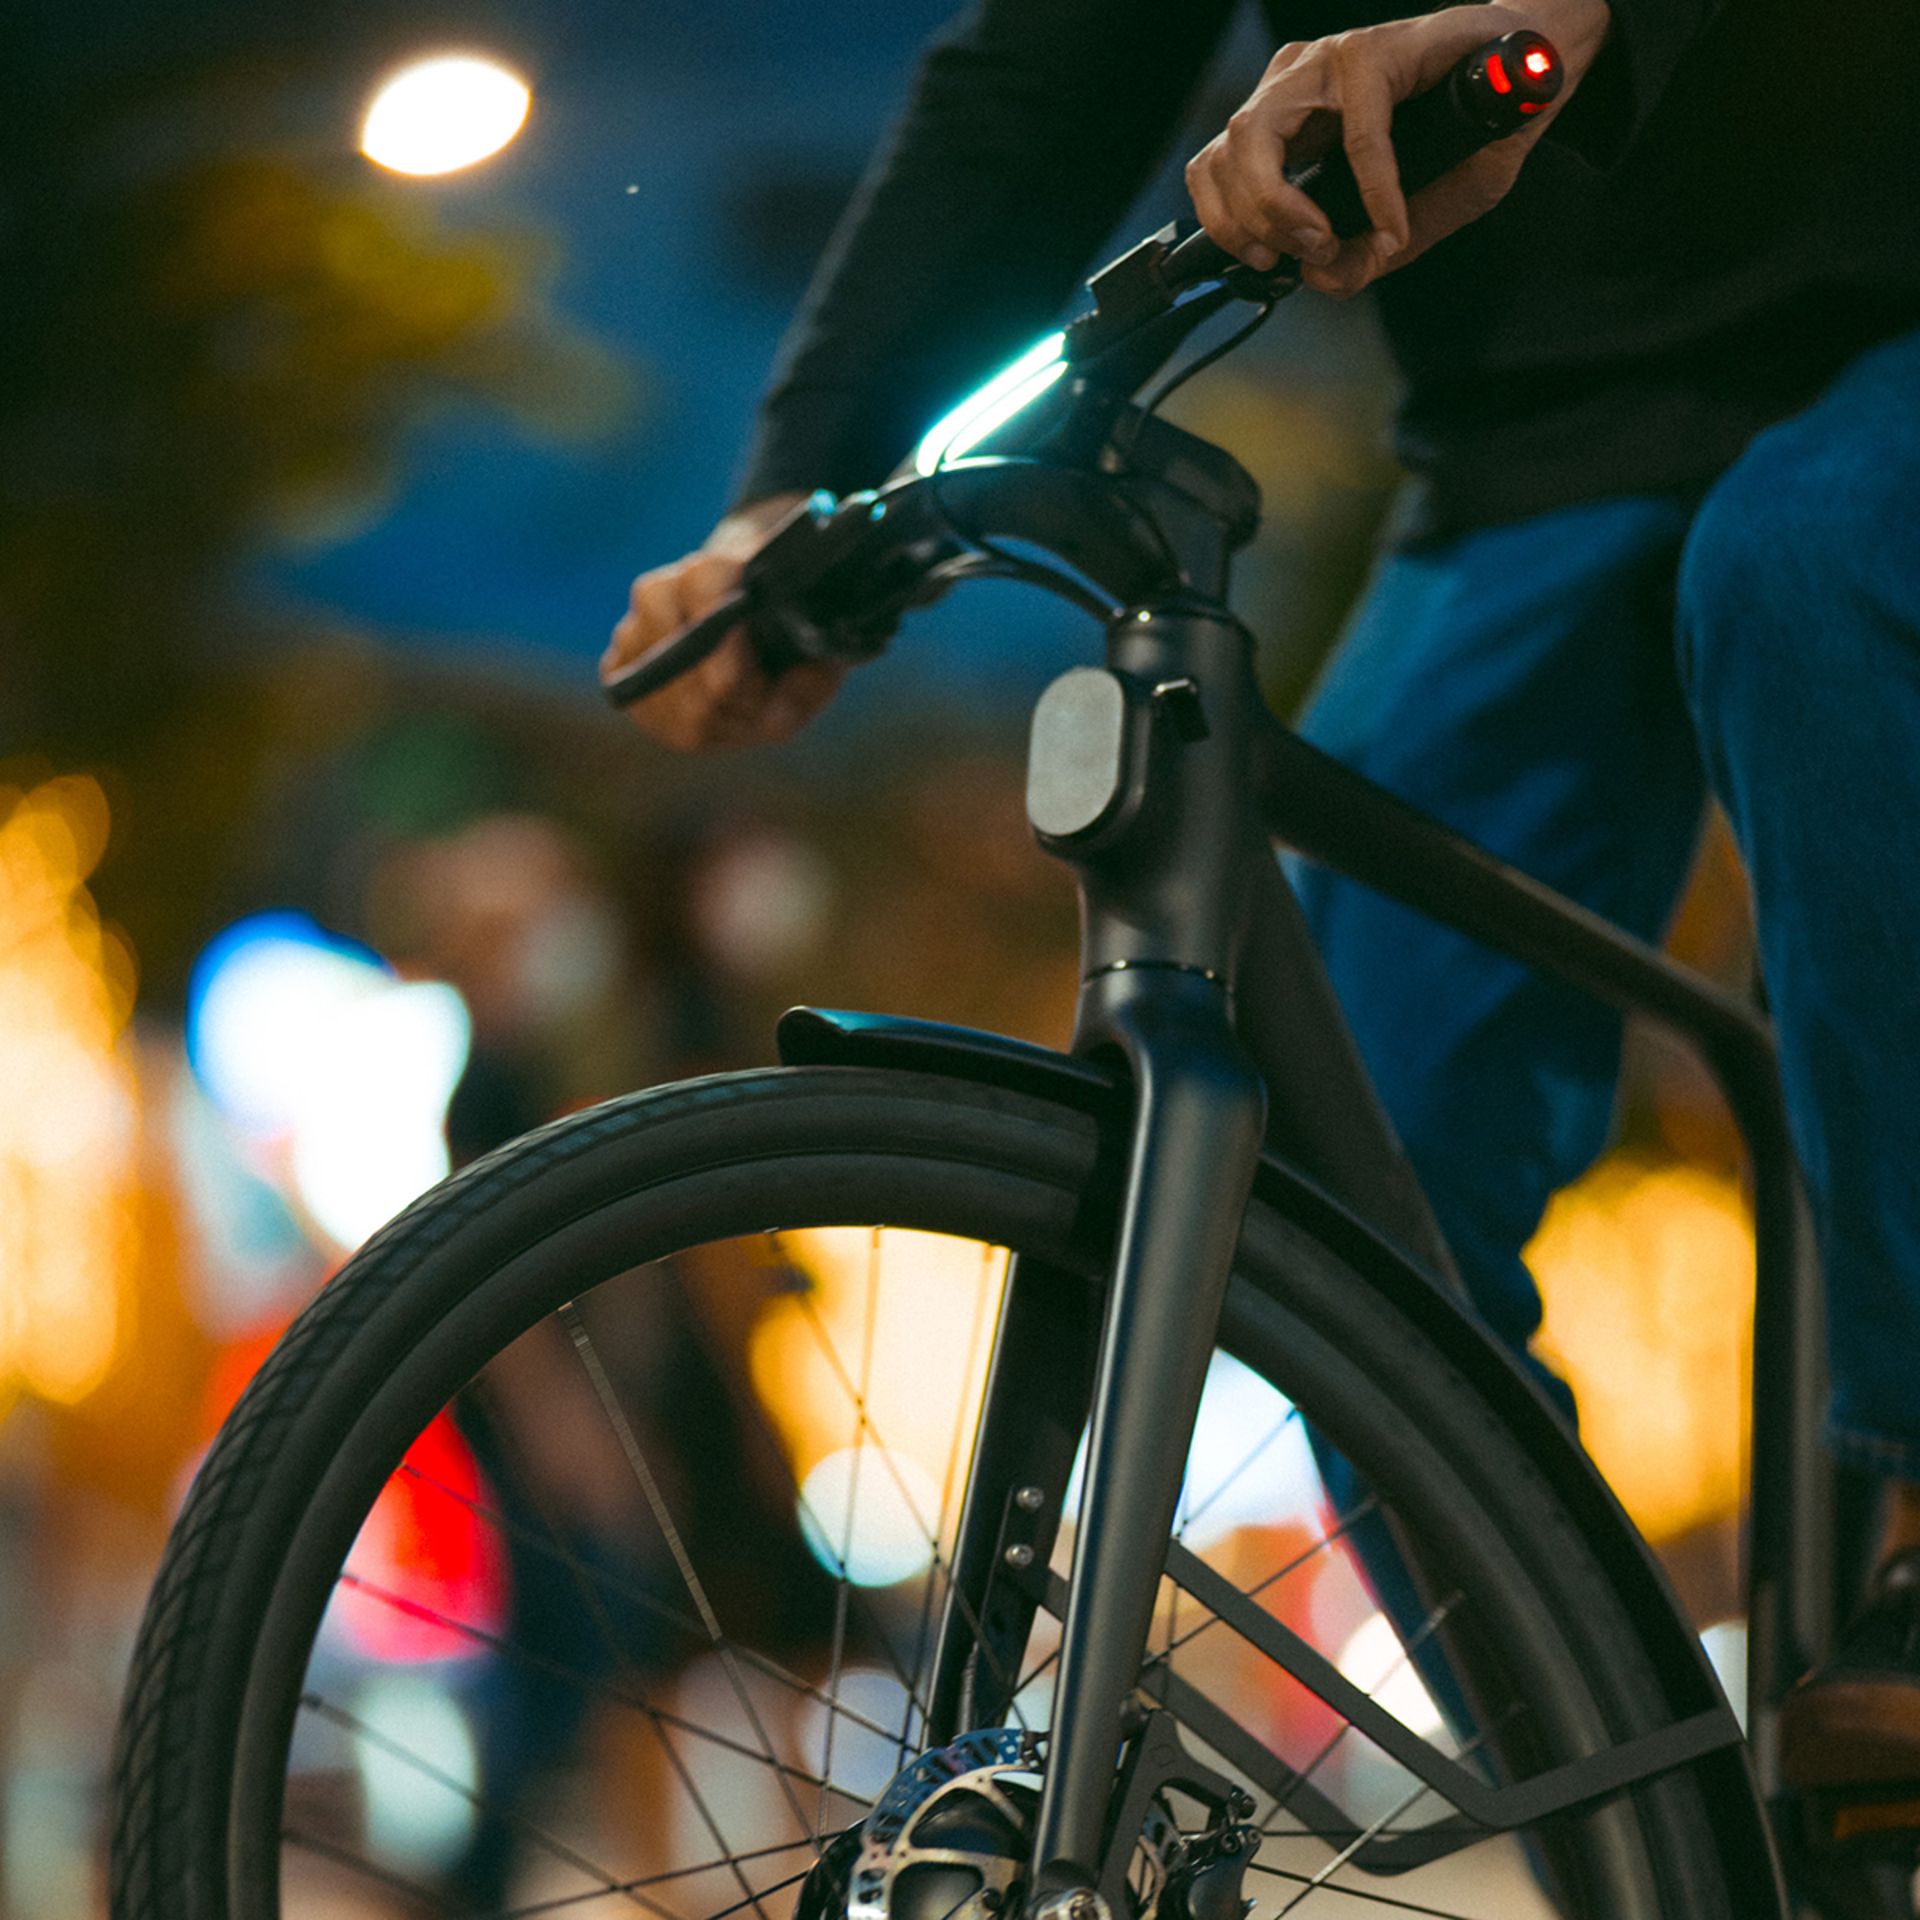 Modmo Saigon+ Electric Bicycle - RRP £2800 - Size L (Rider 175-190cm) - Image 16 of 19